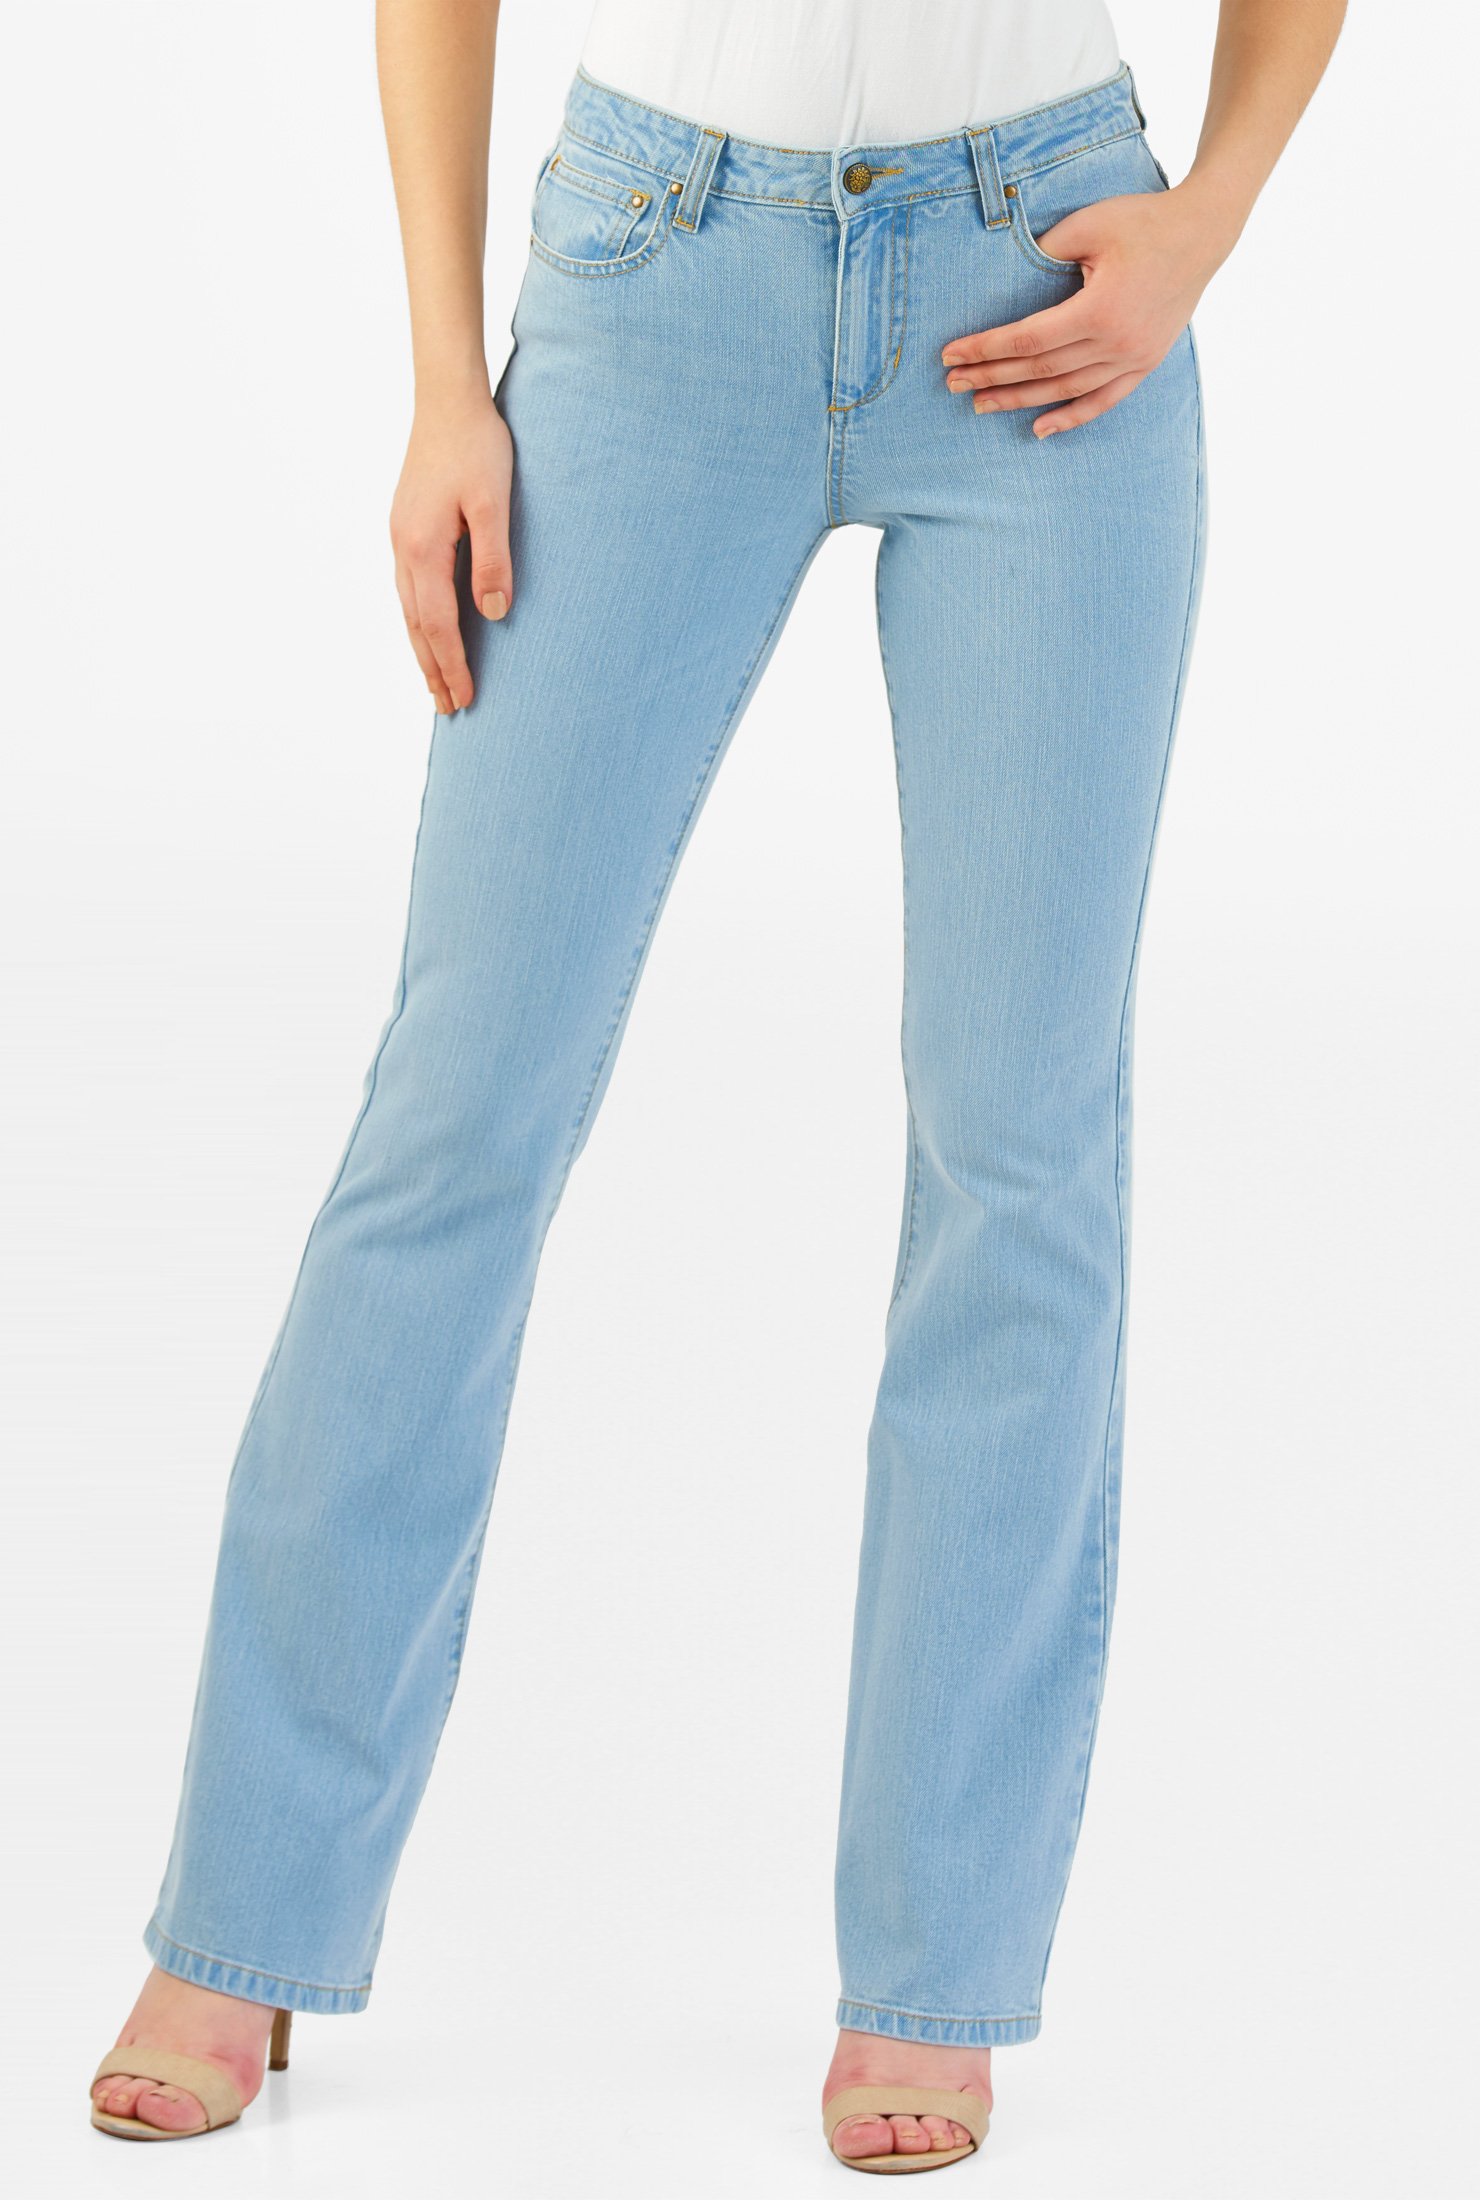 Shop Boot-cut ice blue denim jeans | eShakti